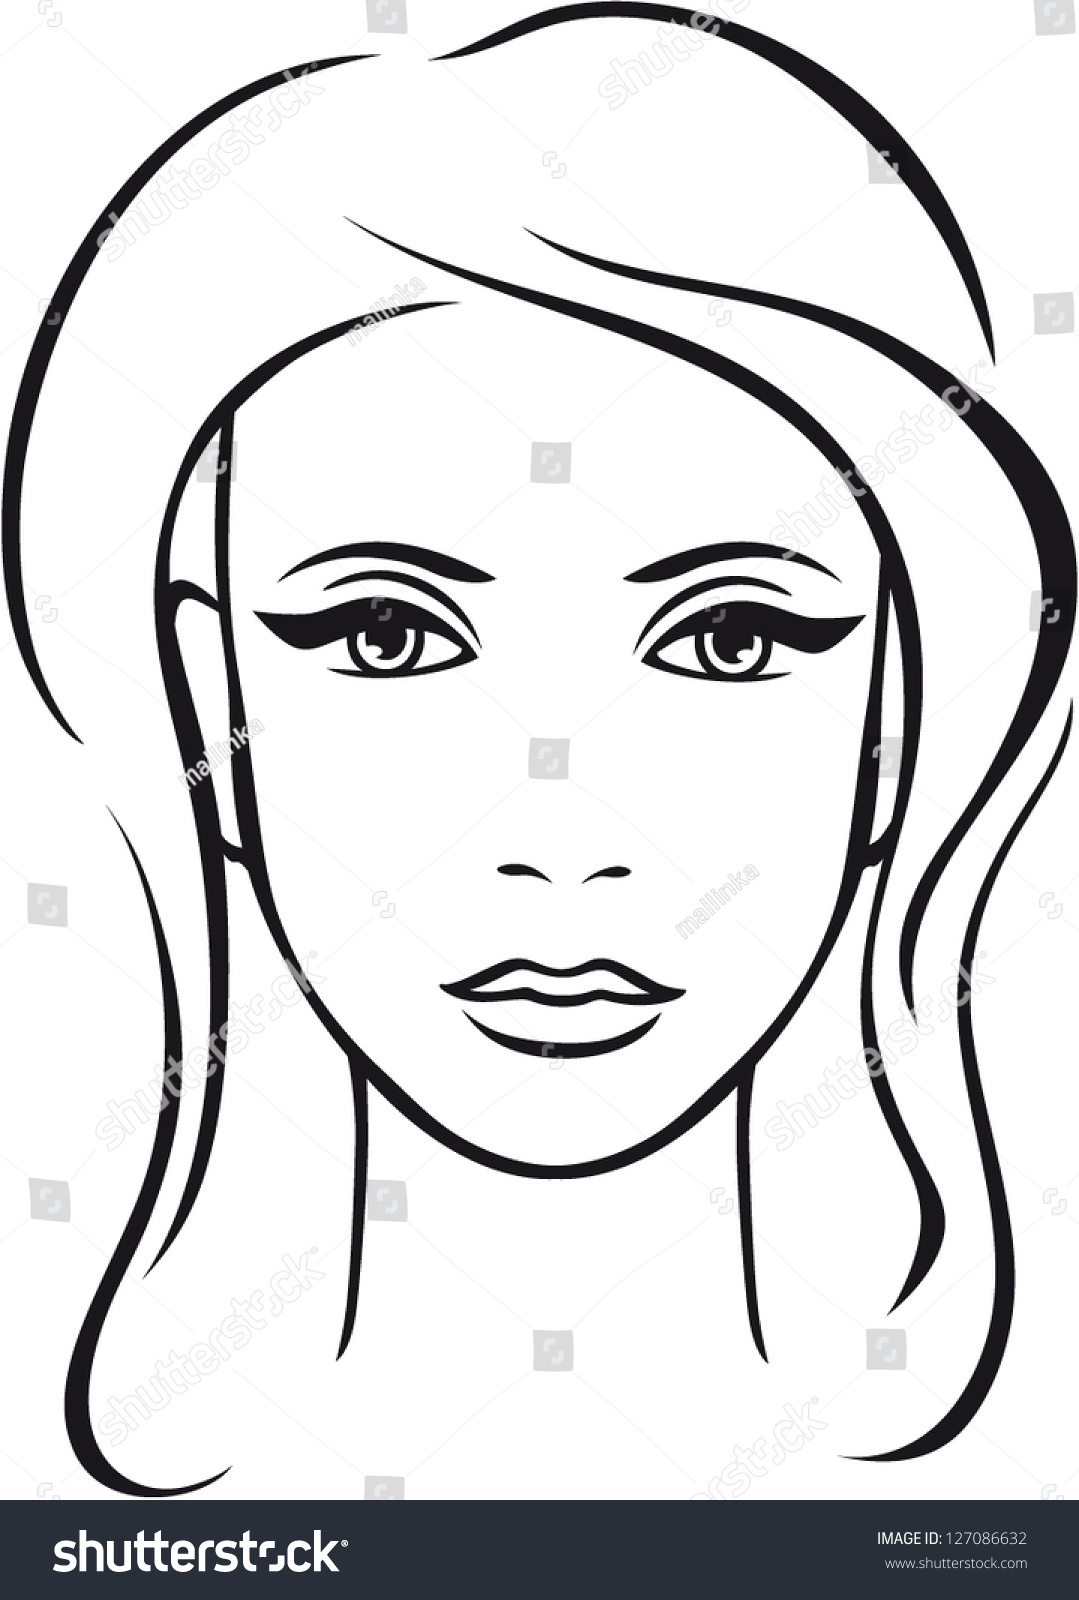 Beautiful Woman Face. Vector. - 127086632 : Shutterstock